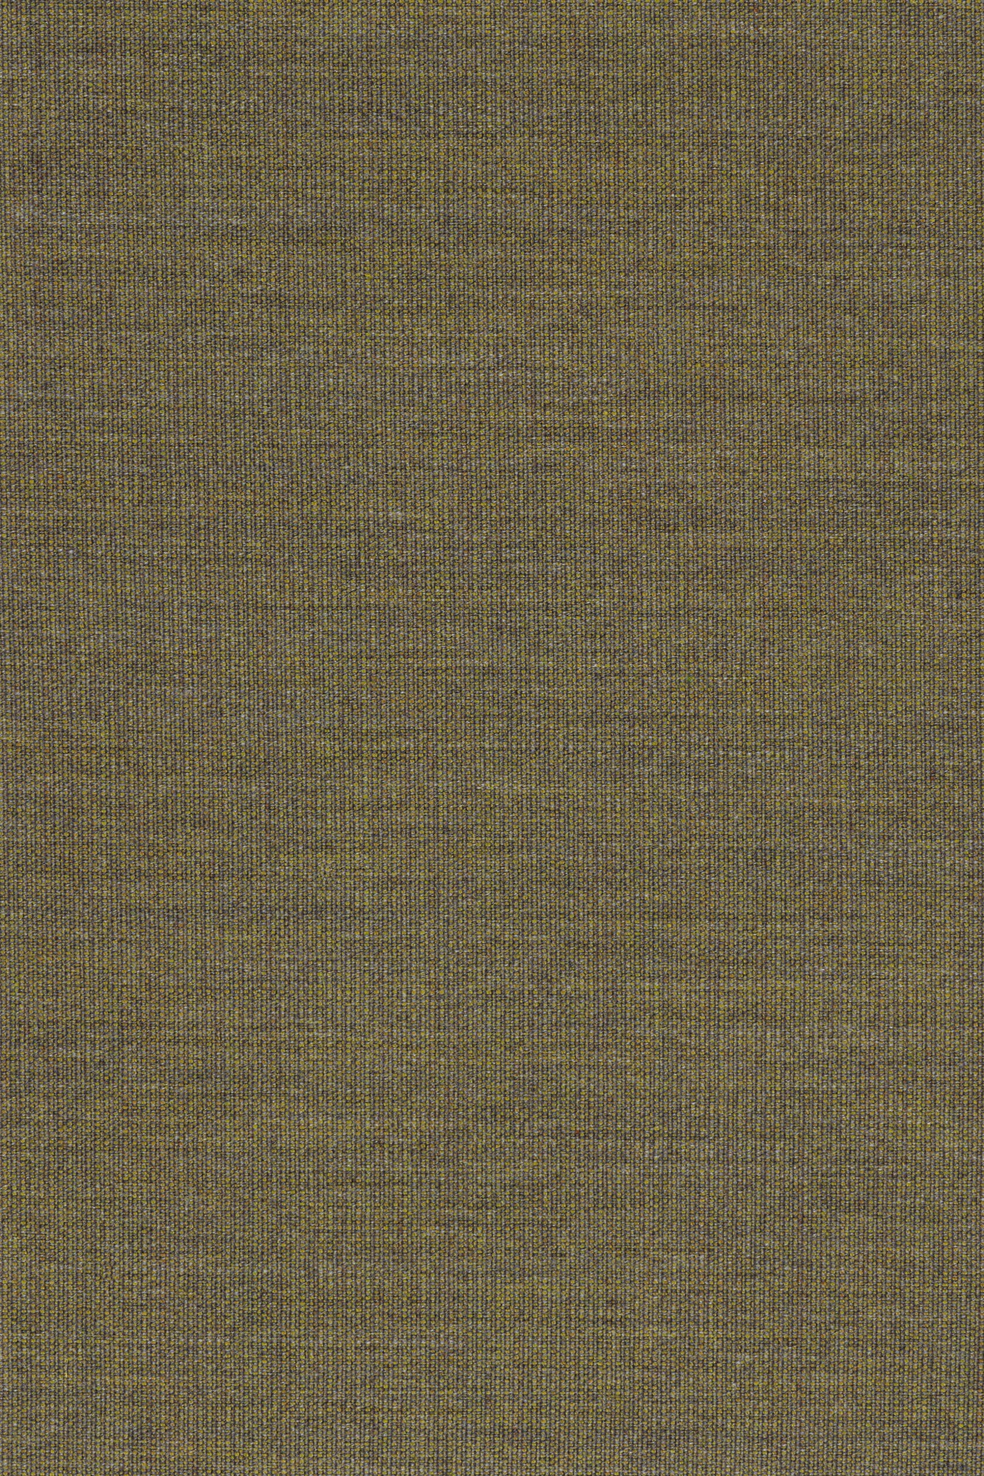 Fabric sample Canvas 2 964 green